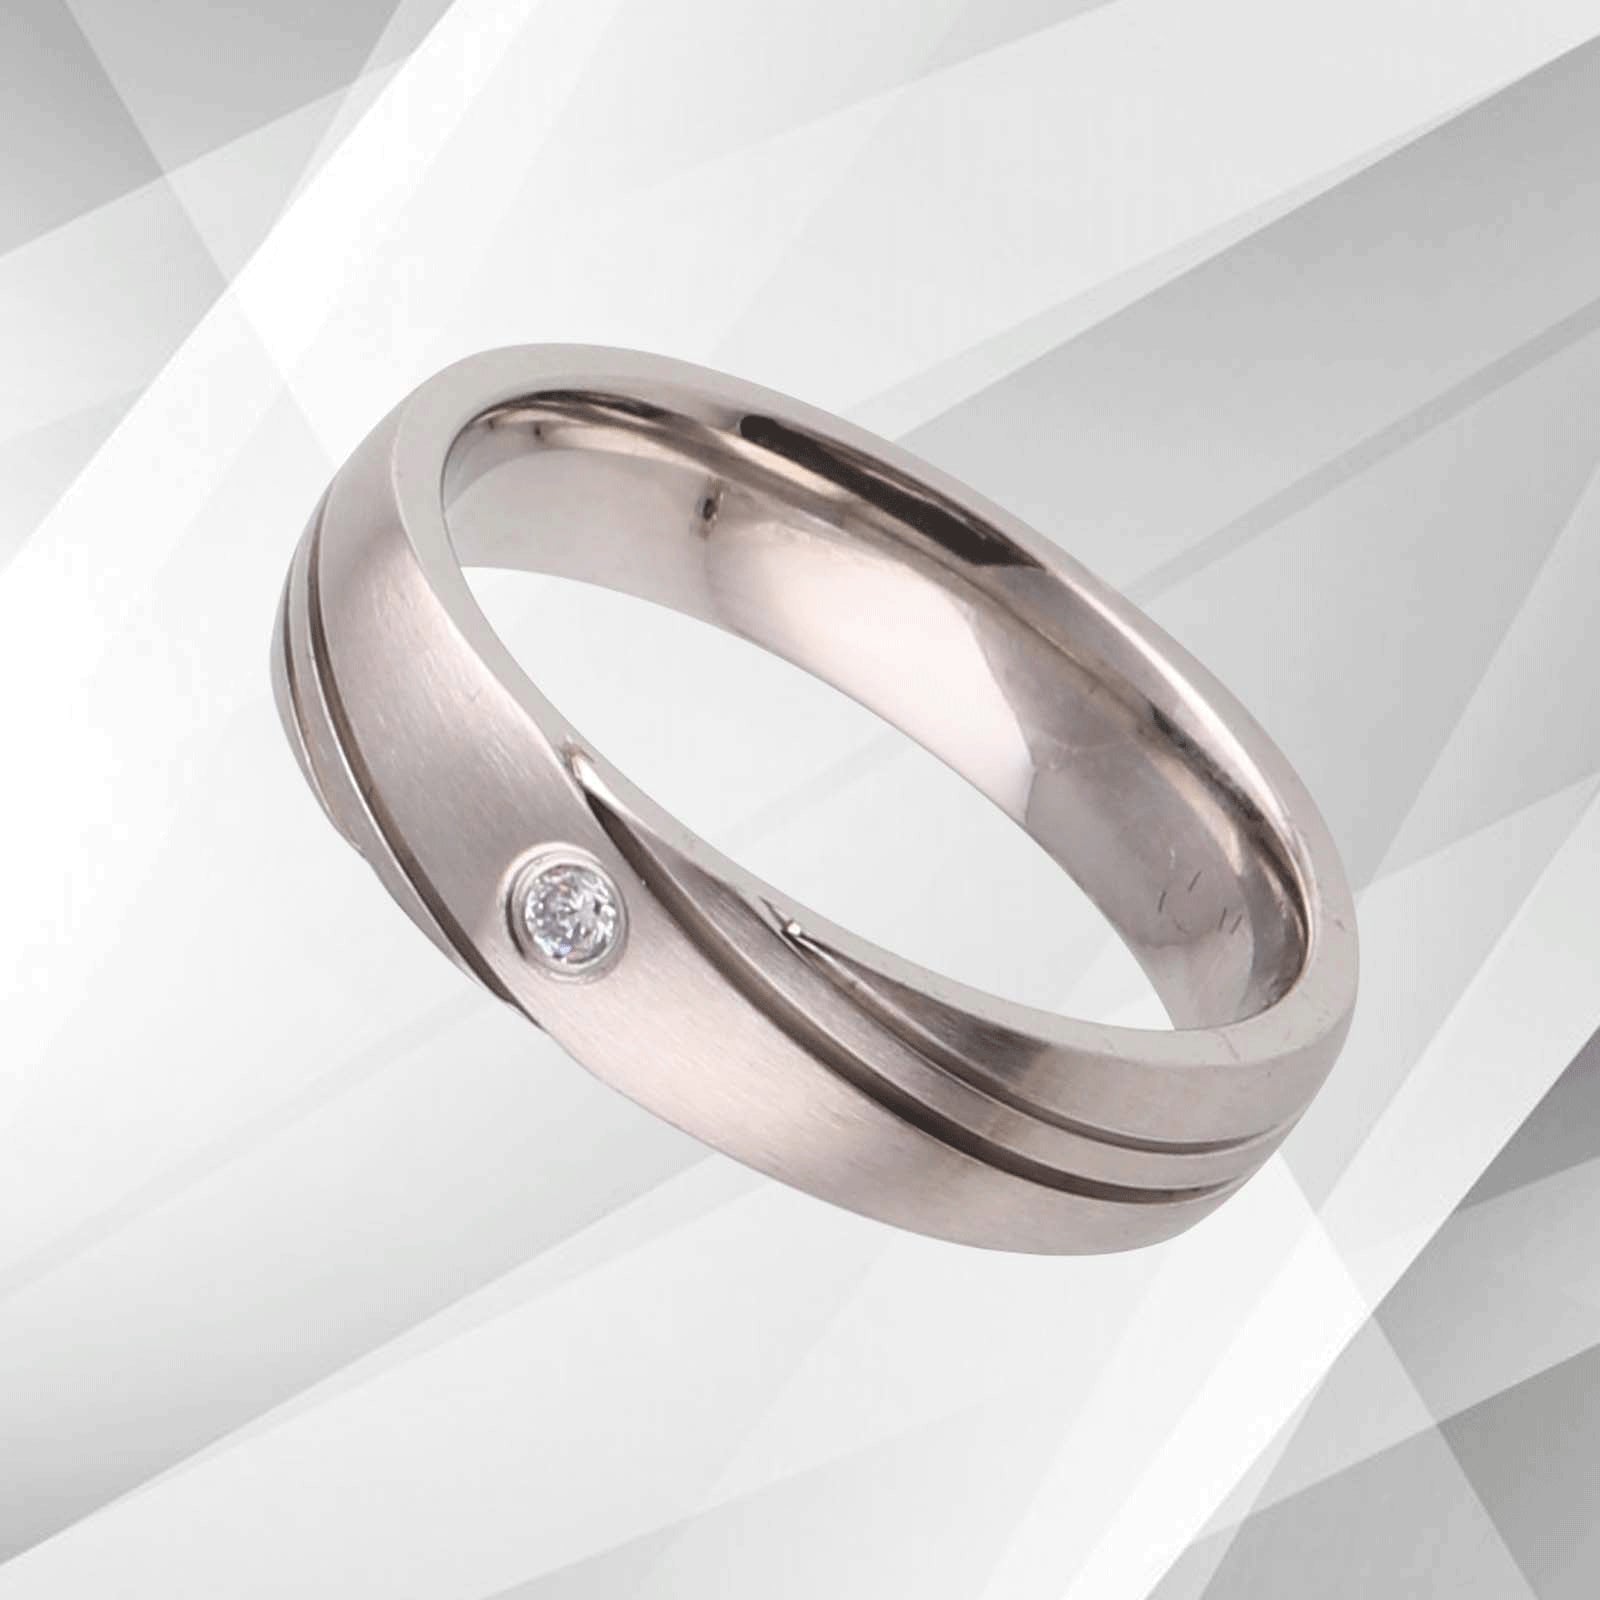 Stylish 5mm Titanium CZ Diamond Ring - 18Ct White Gold Finish - Women's Band for Engagement, Wedding, Anniversary - Comfort Fit - NDFK12A - Jewelry & Watches - Bijou Her -  -  - 